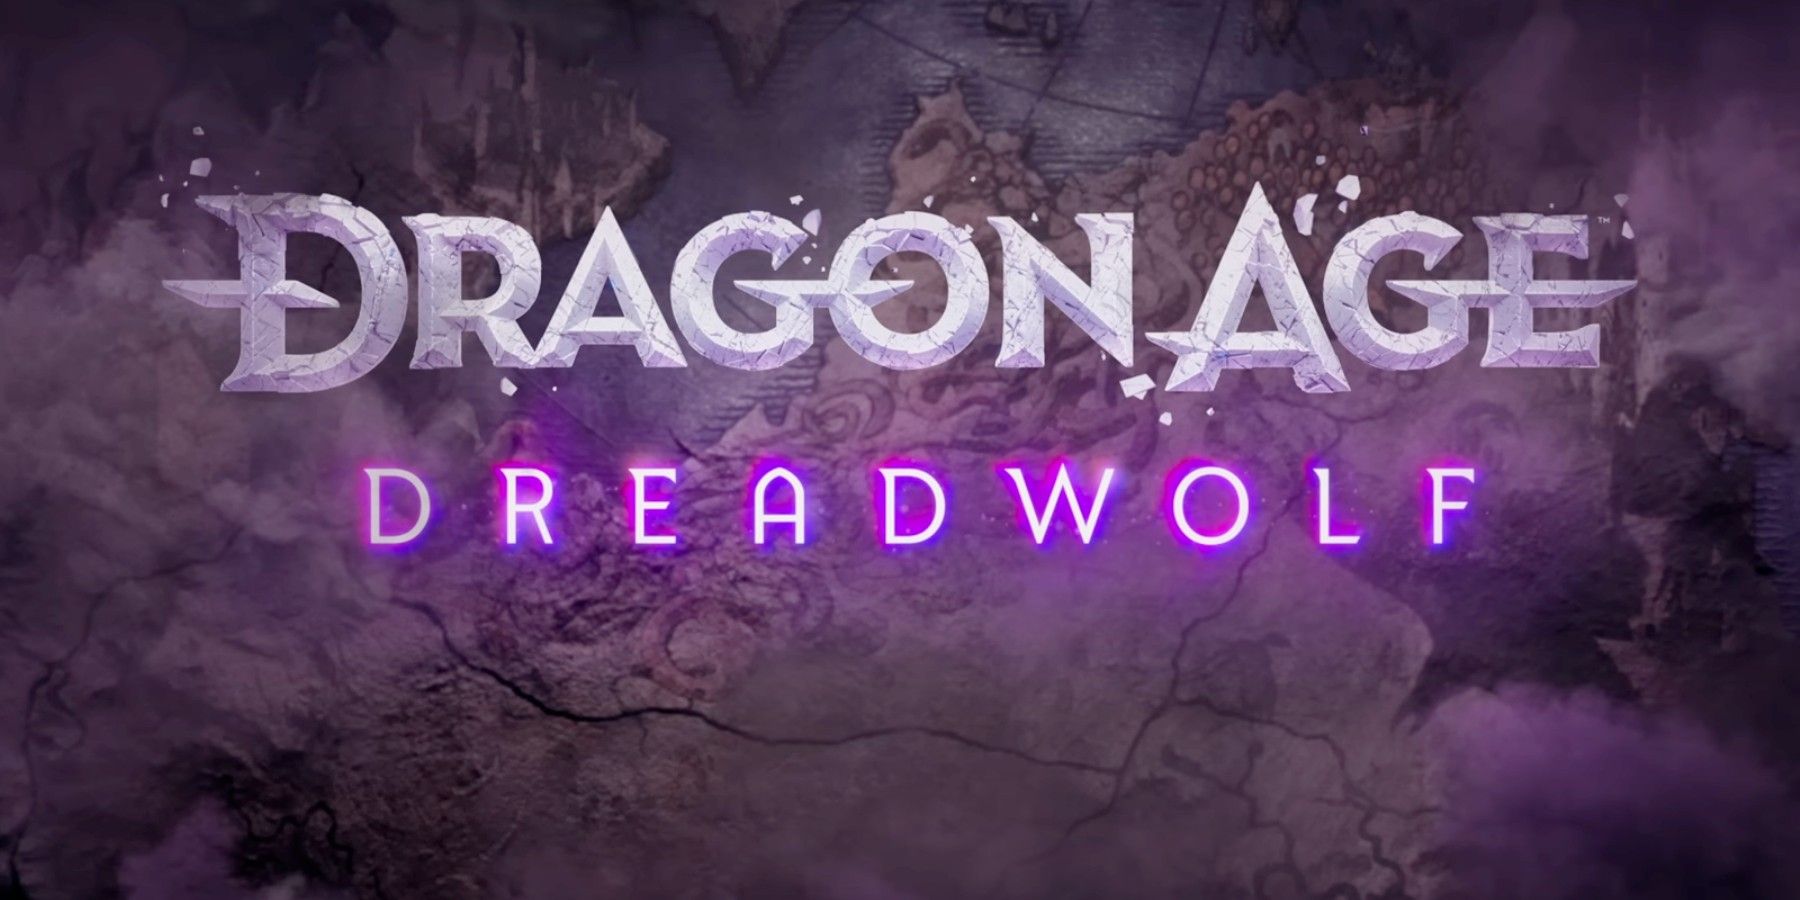 thedas-header-dragon-age-dreadwolf